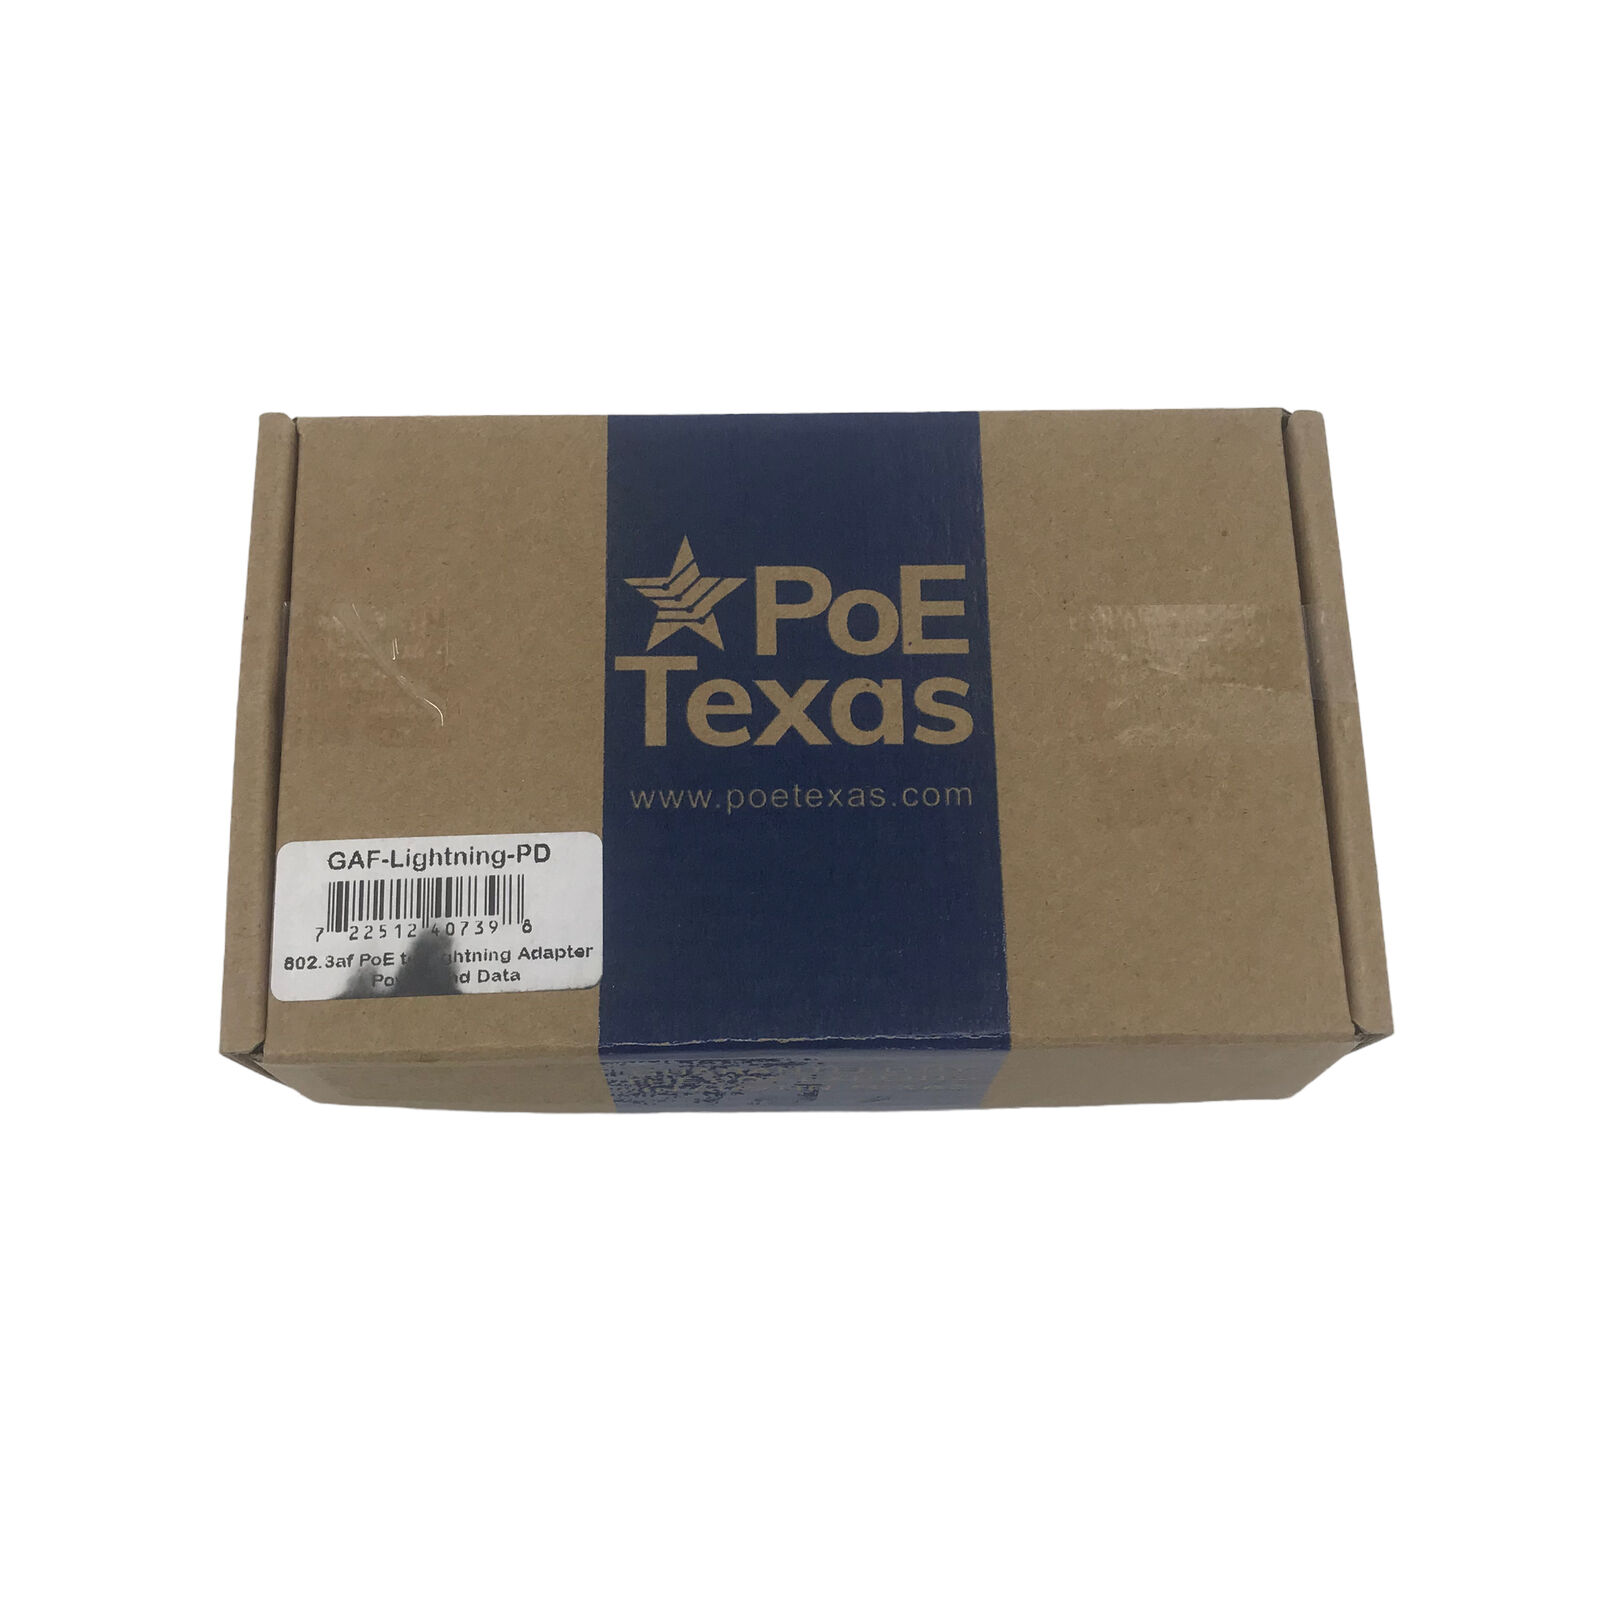 PoE Texas PoE Power and Data Ethernet Adapter Lightning GAF-Lightning-PD